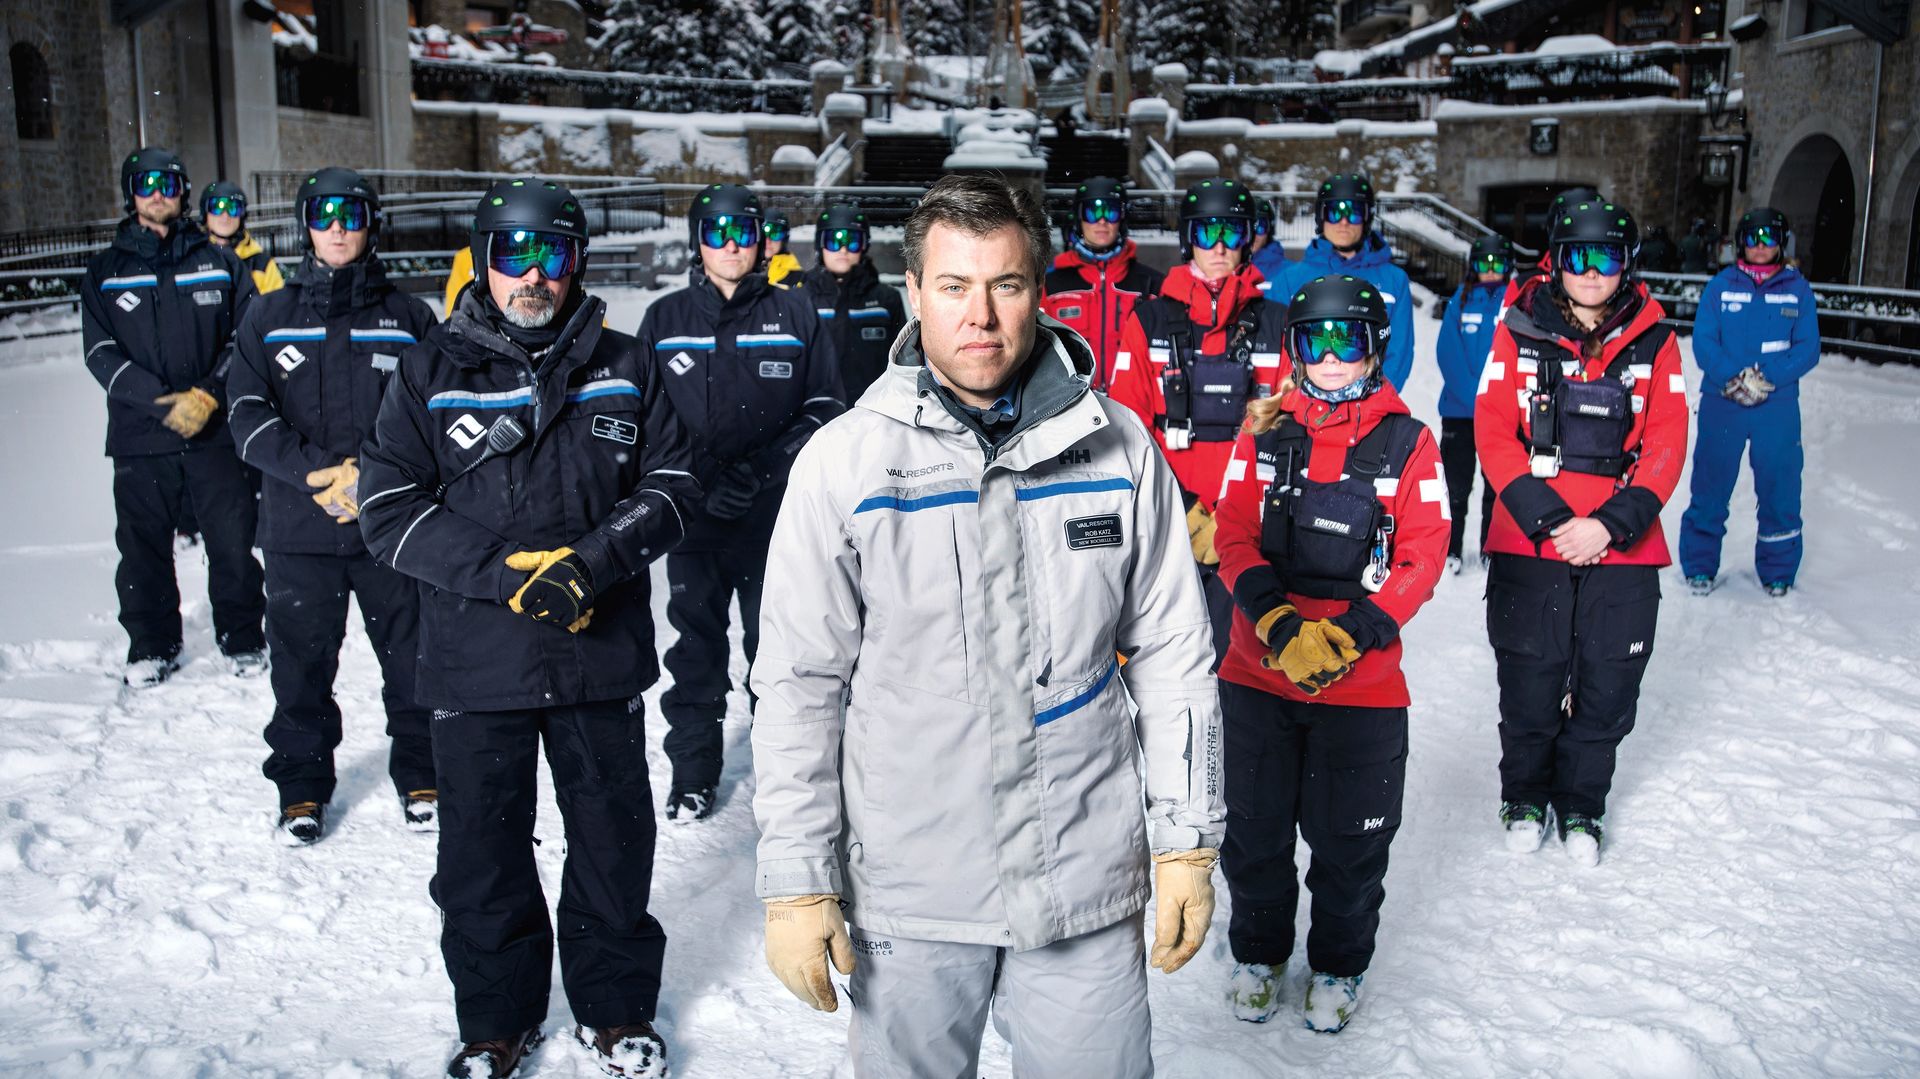 Vail Resorts ha vendido 1,4 millones de pases de temporada de esquí